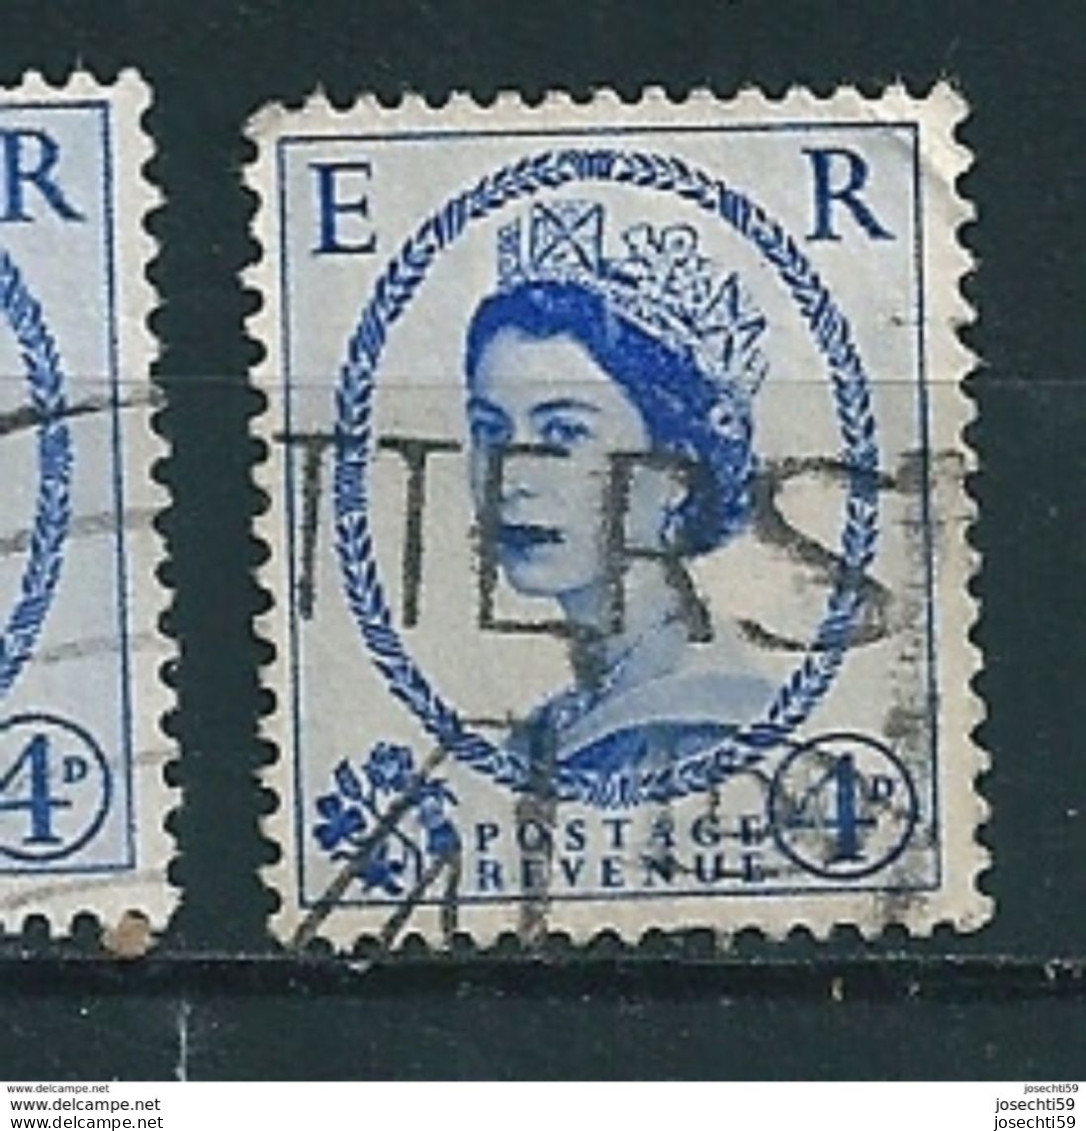 N° 268 Elizabeth II- Filigrane M  Timbre  GRANDE BRETAGNE 1952 Stamp GB Royaume Uni Postage Revenue - Usati